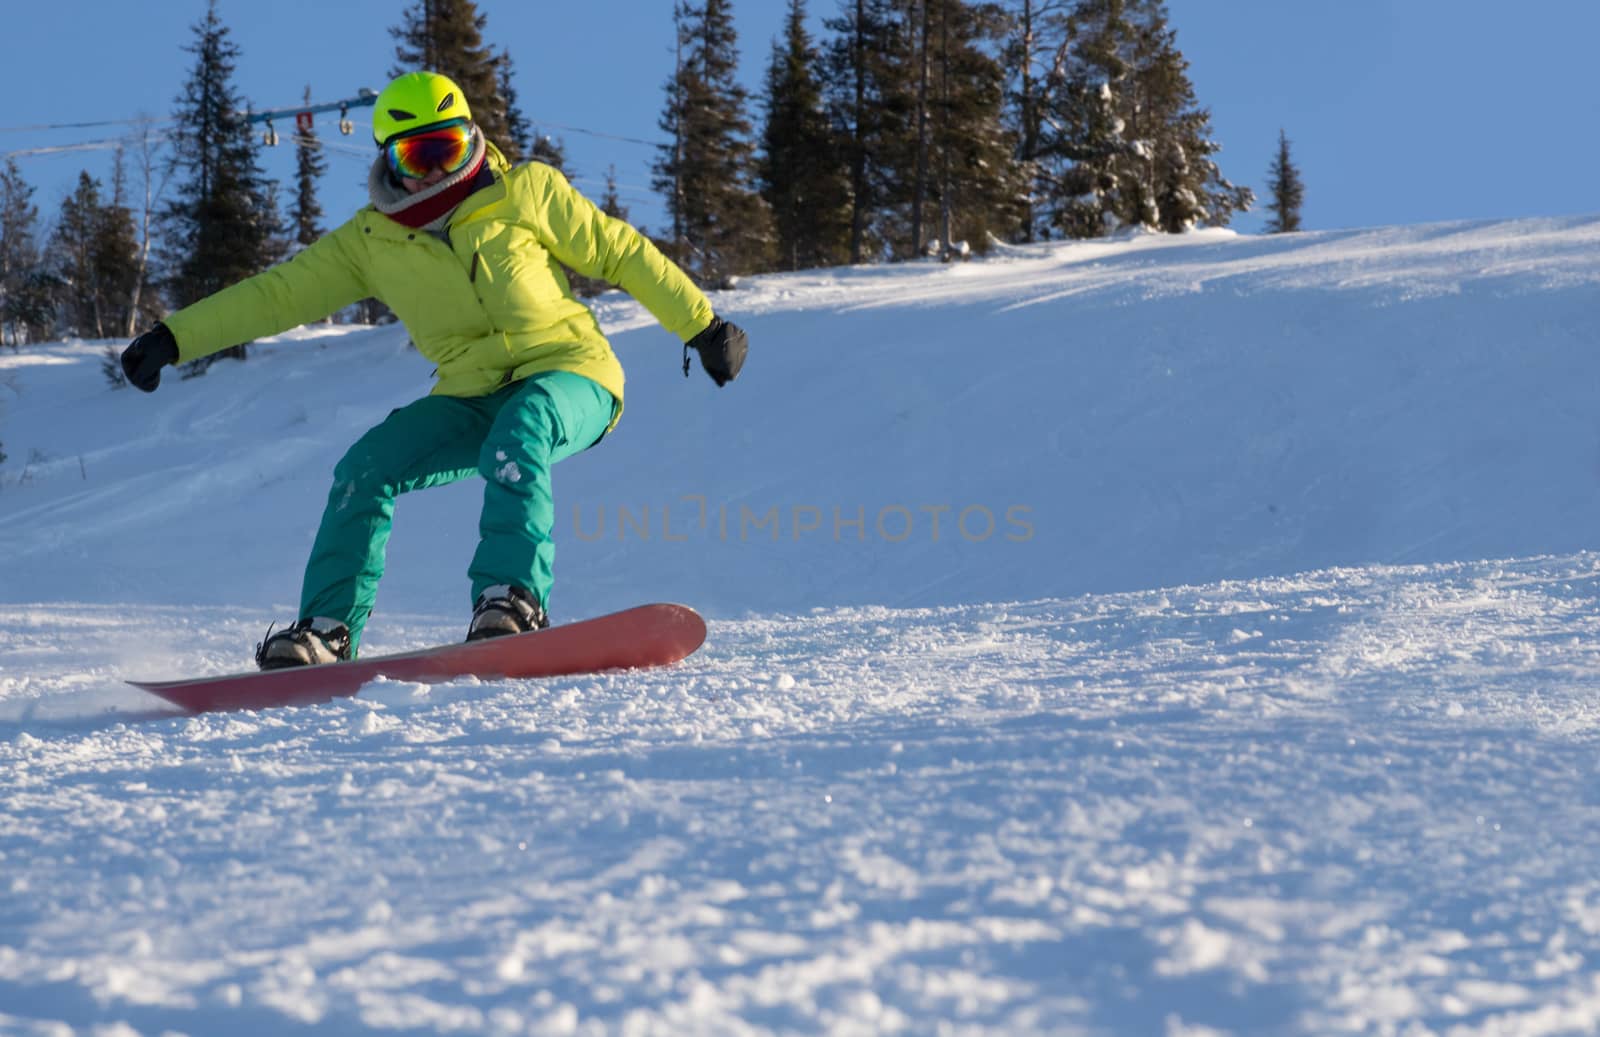 Snowboarder on slope by destillat